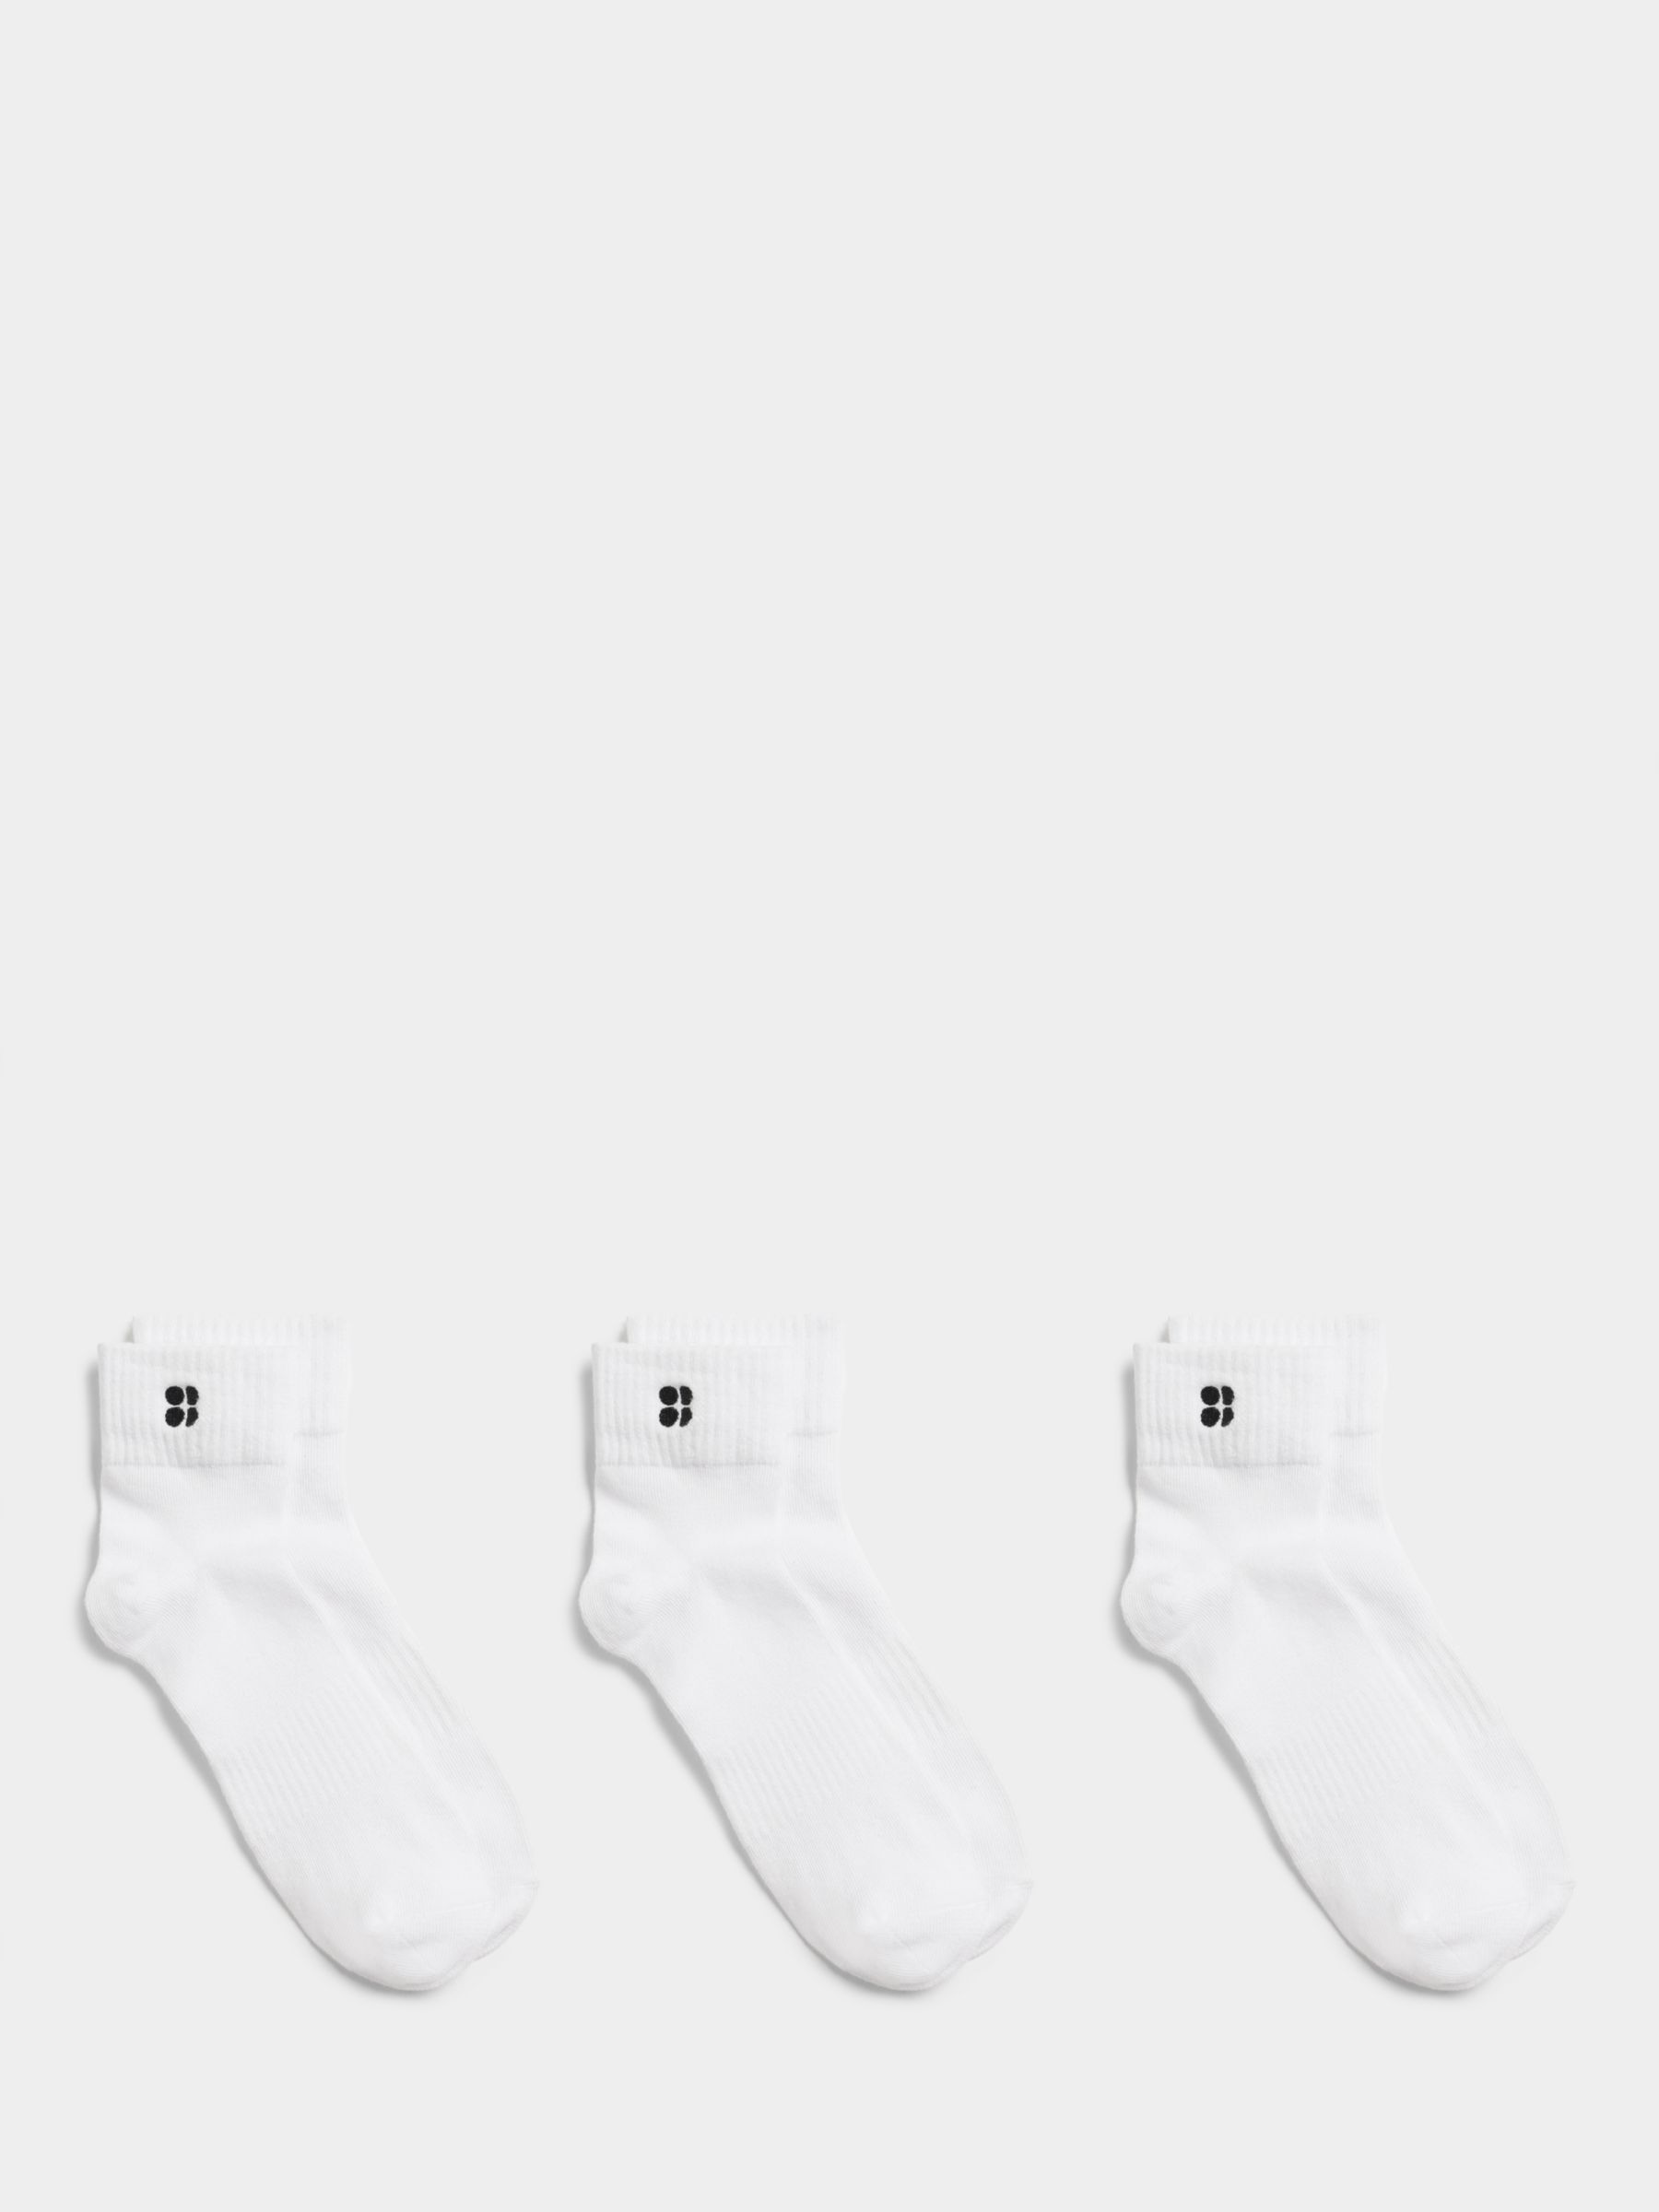 Sweaty Betty Essentials Ankle Socks, Pack of 3, White/Black, 2.5-5